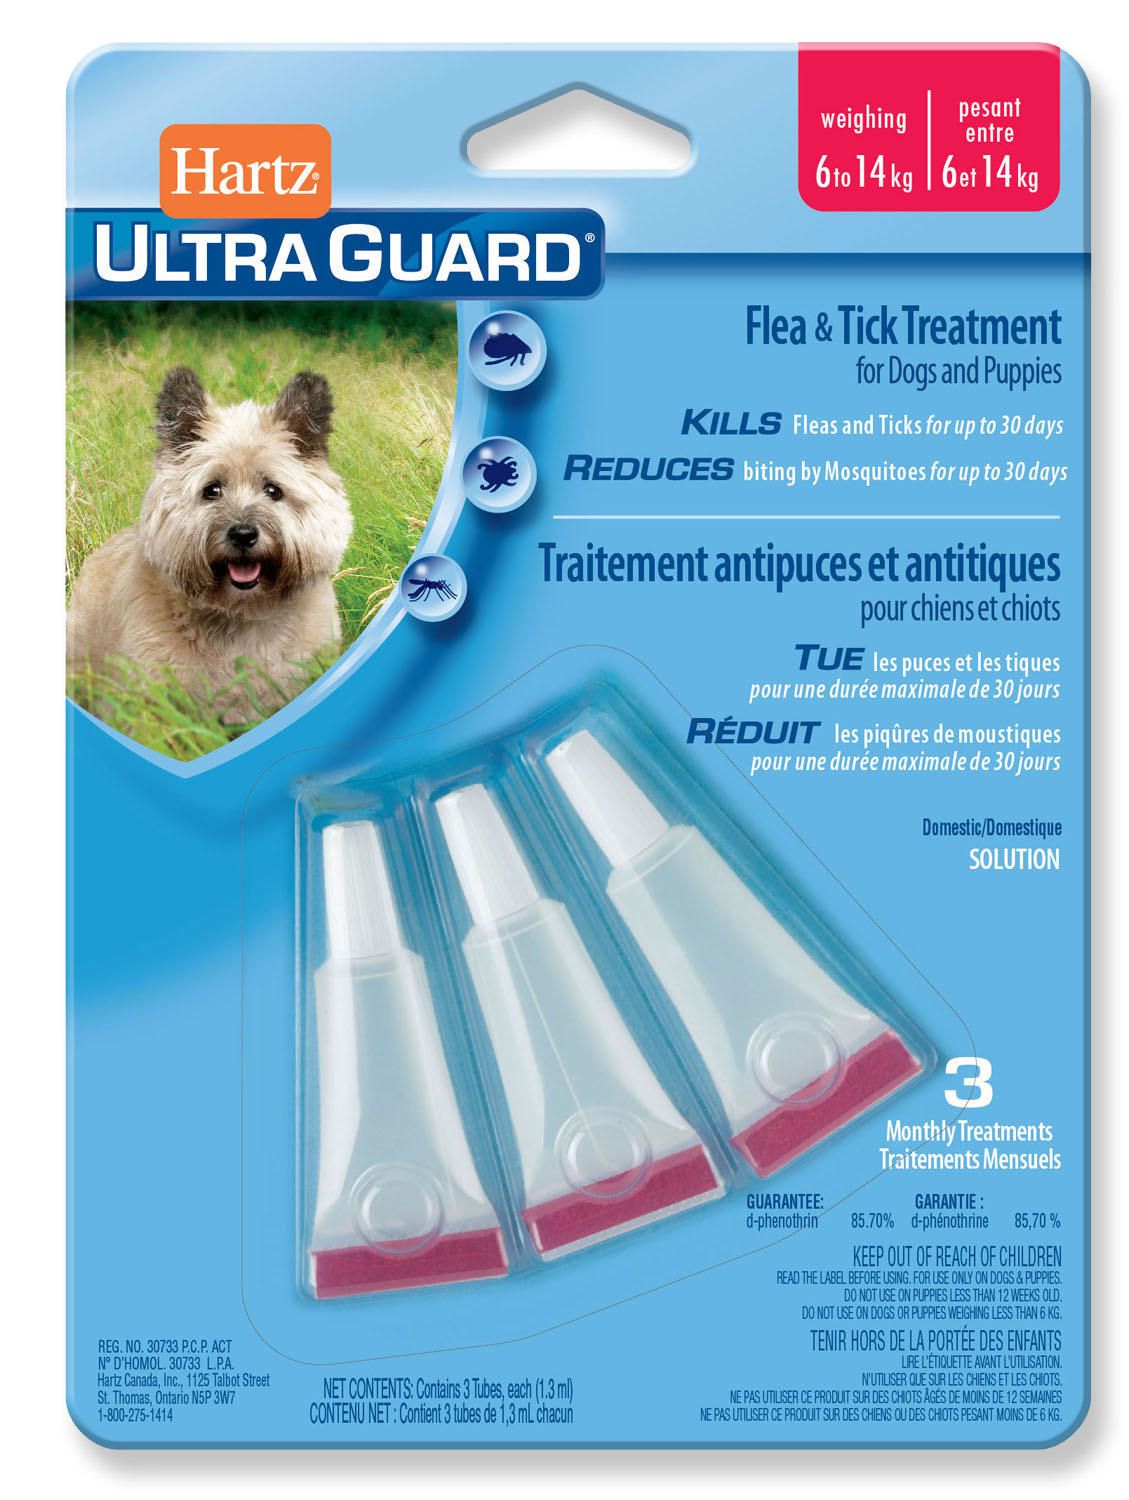 Hartz Ultra Guard Flea & Tick Treatment for Dogs - 6 to 14 kgs